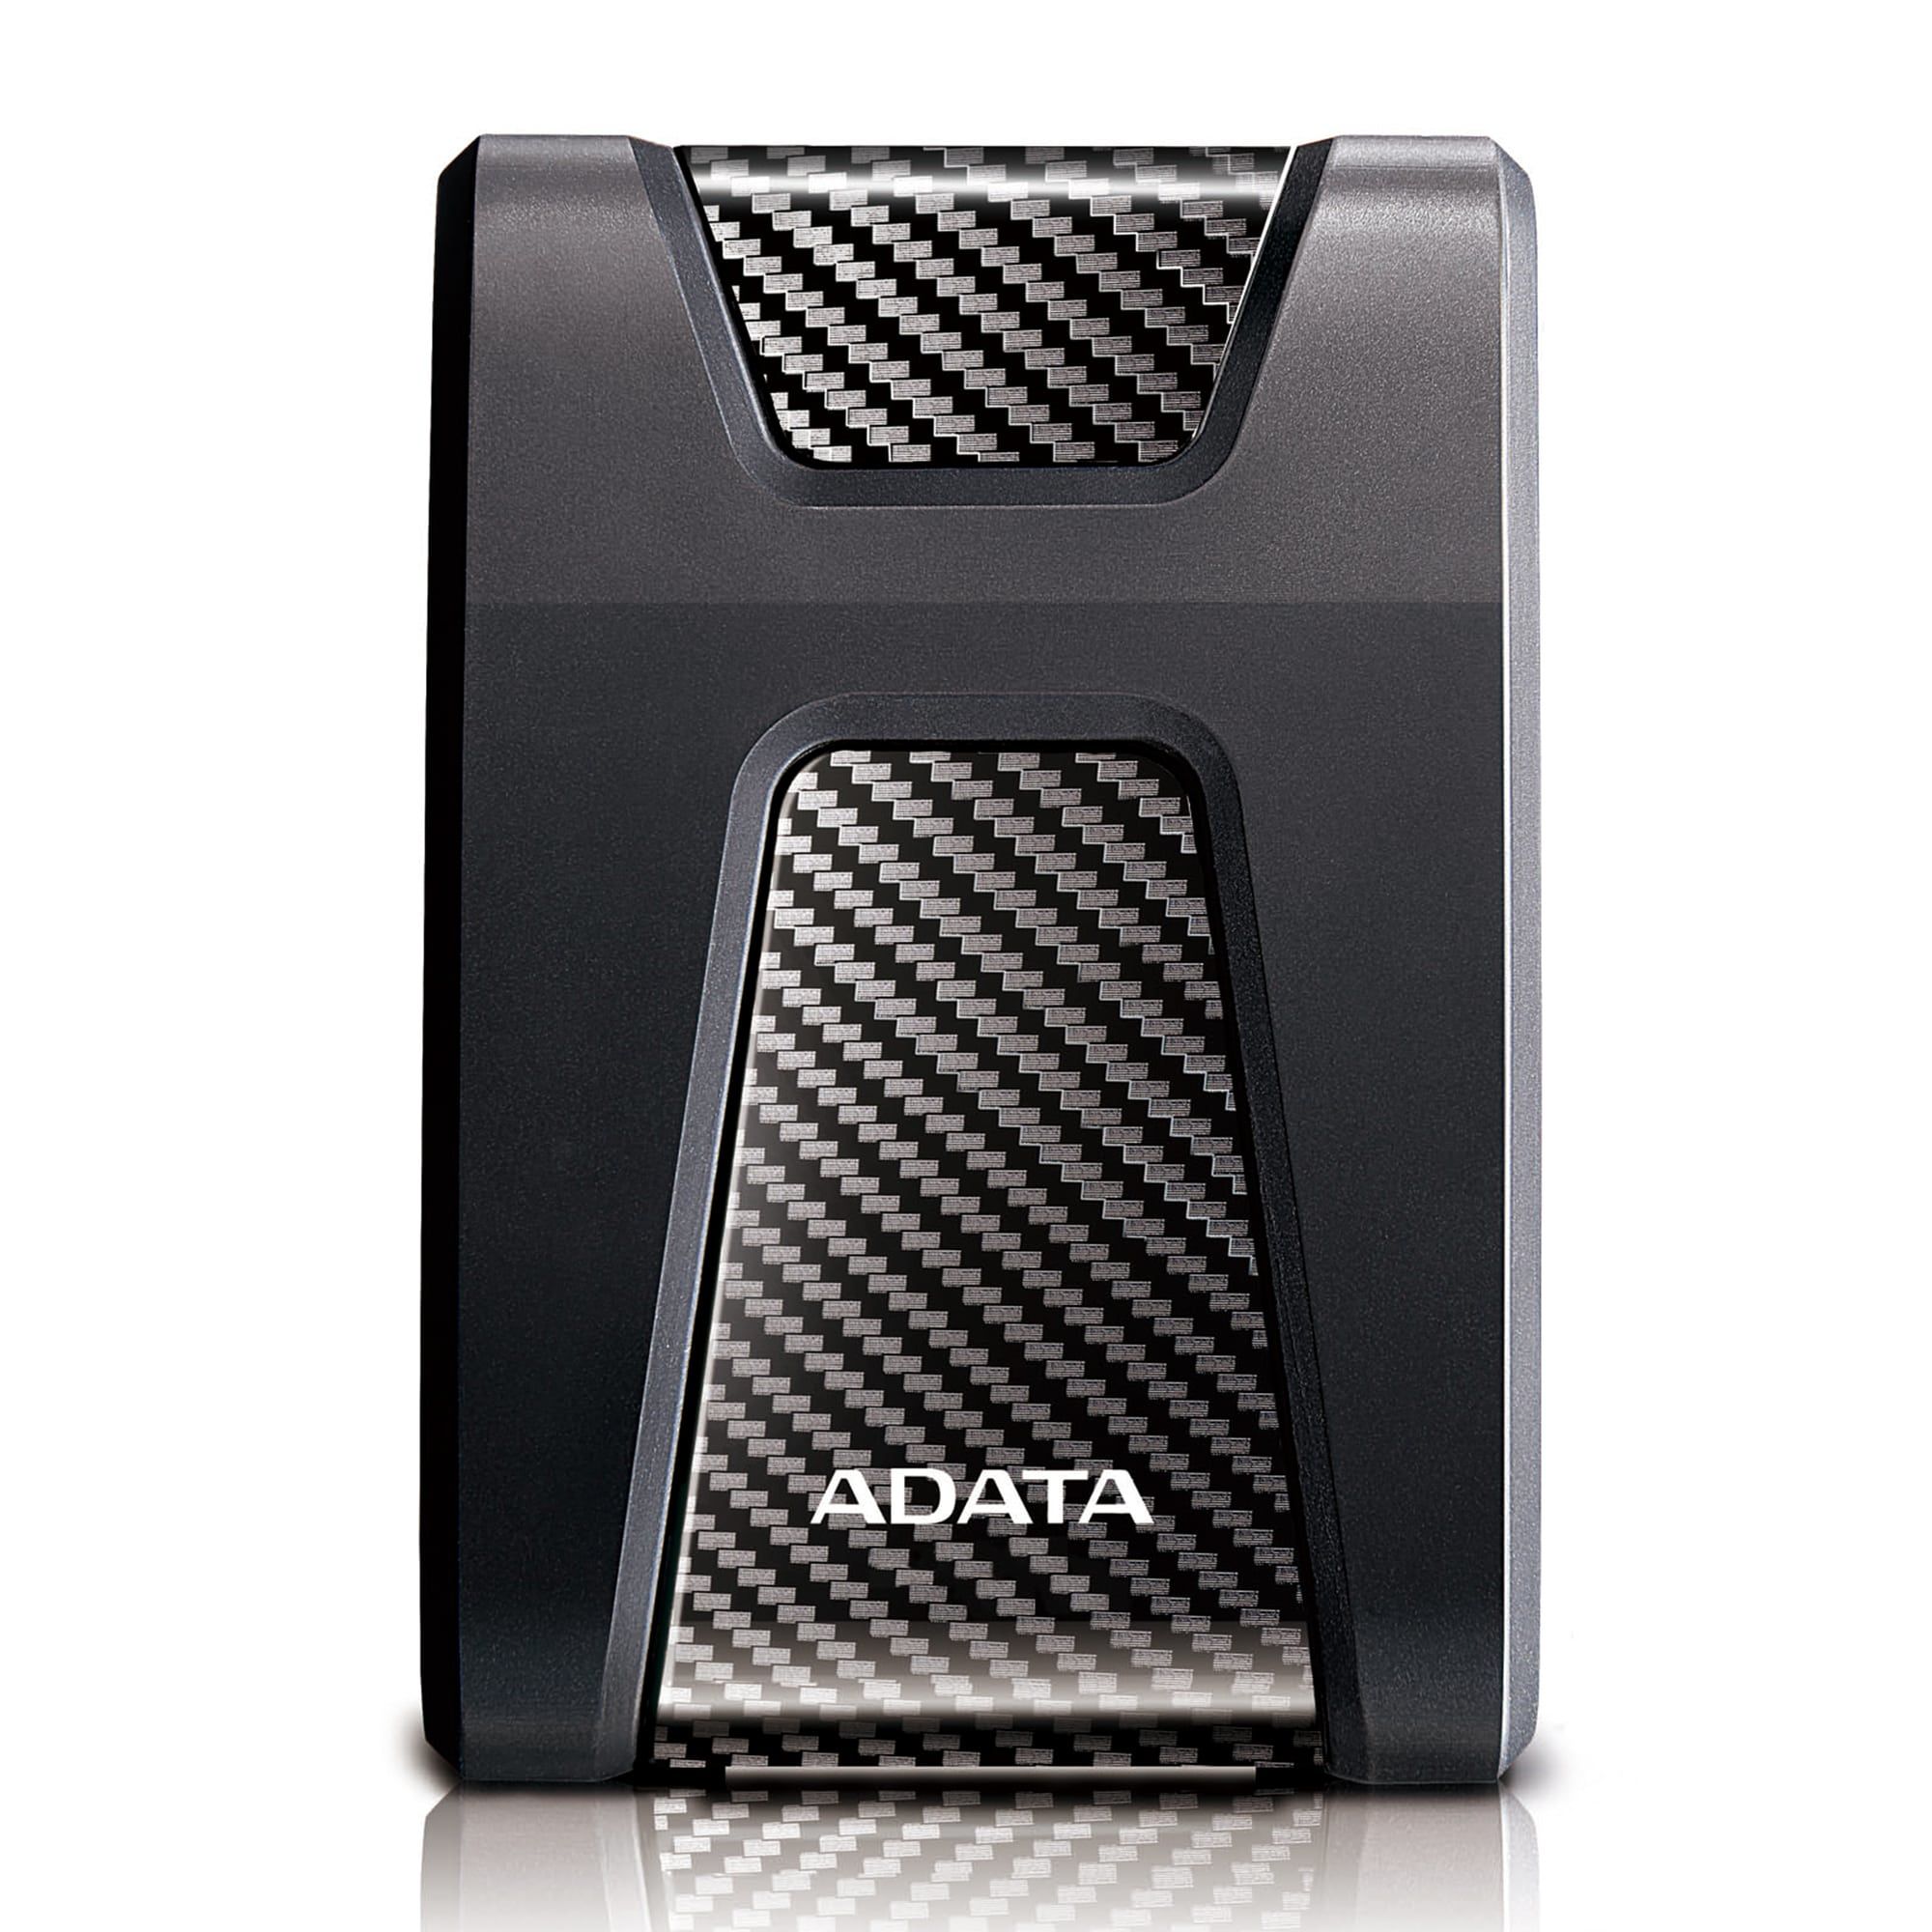 Externí pevný disk ADATA HD650 2000 GB černý od ninex.cz